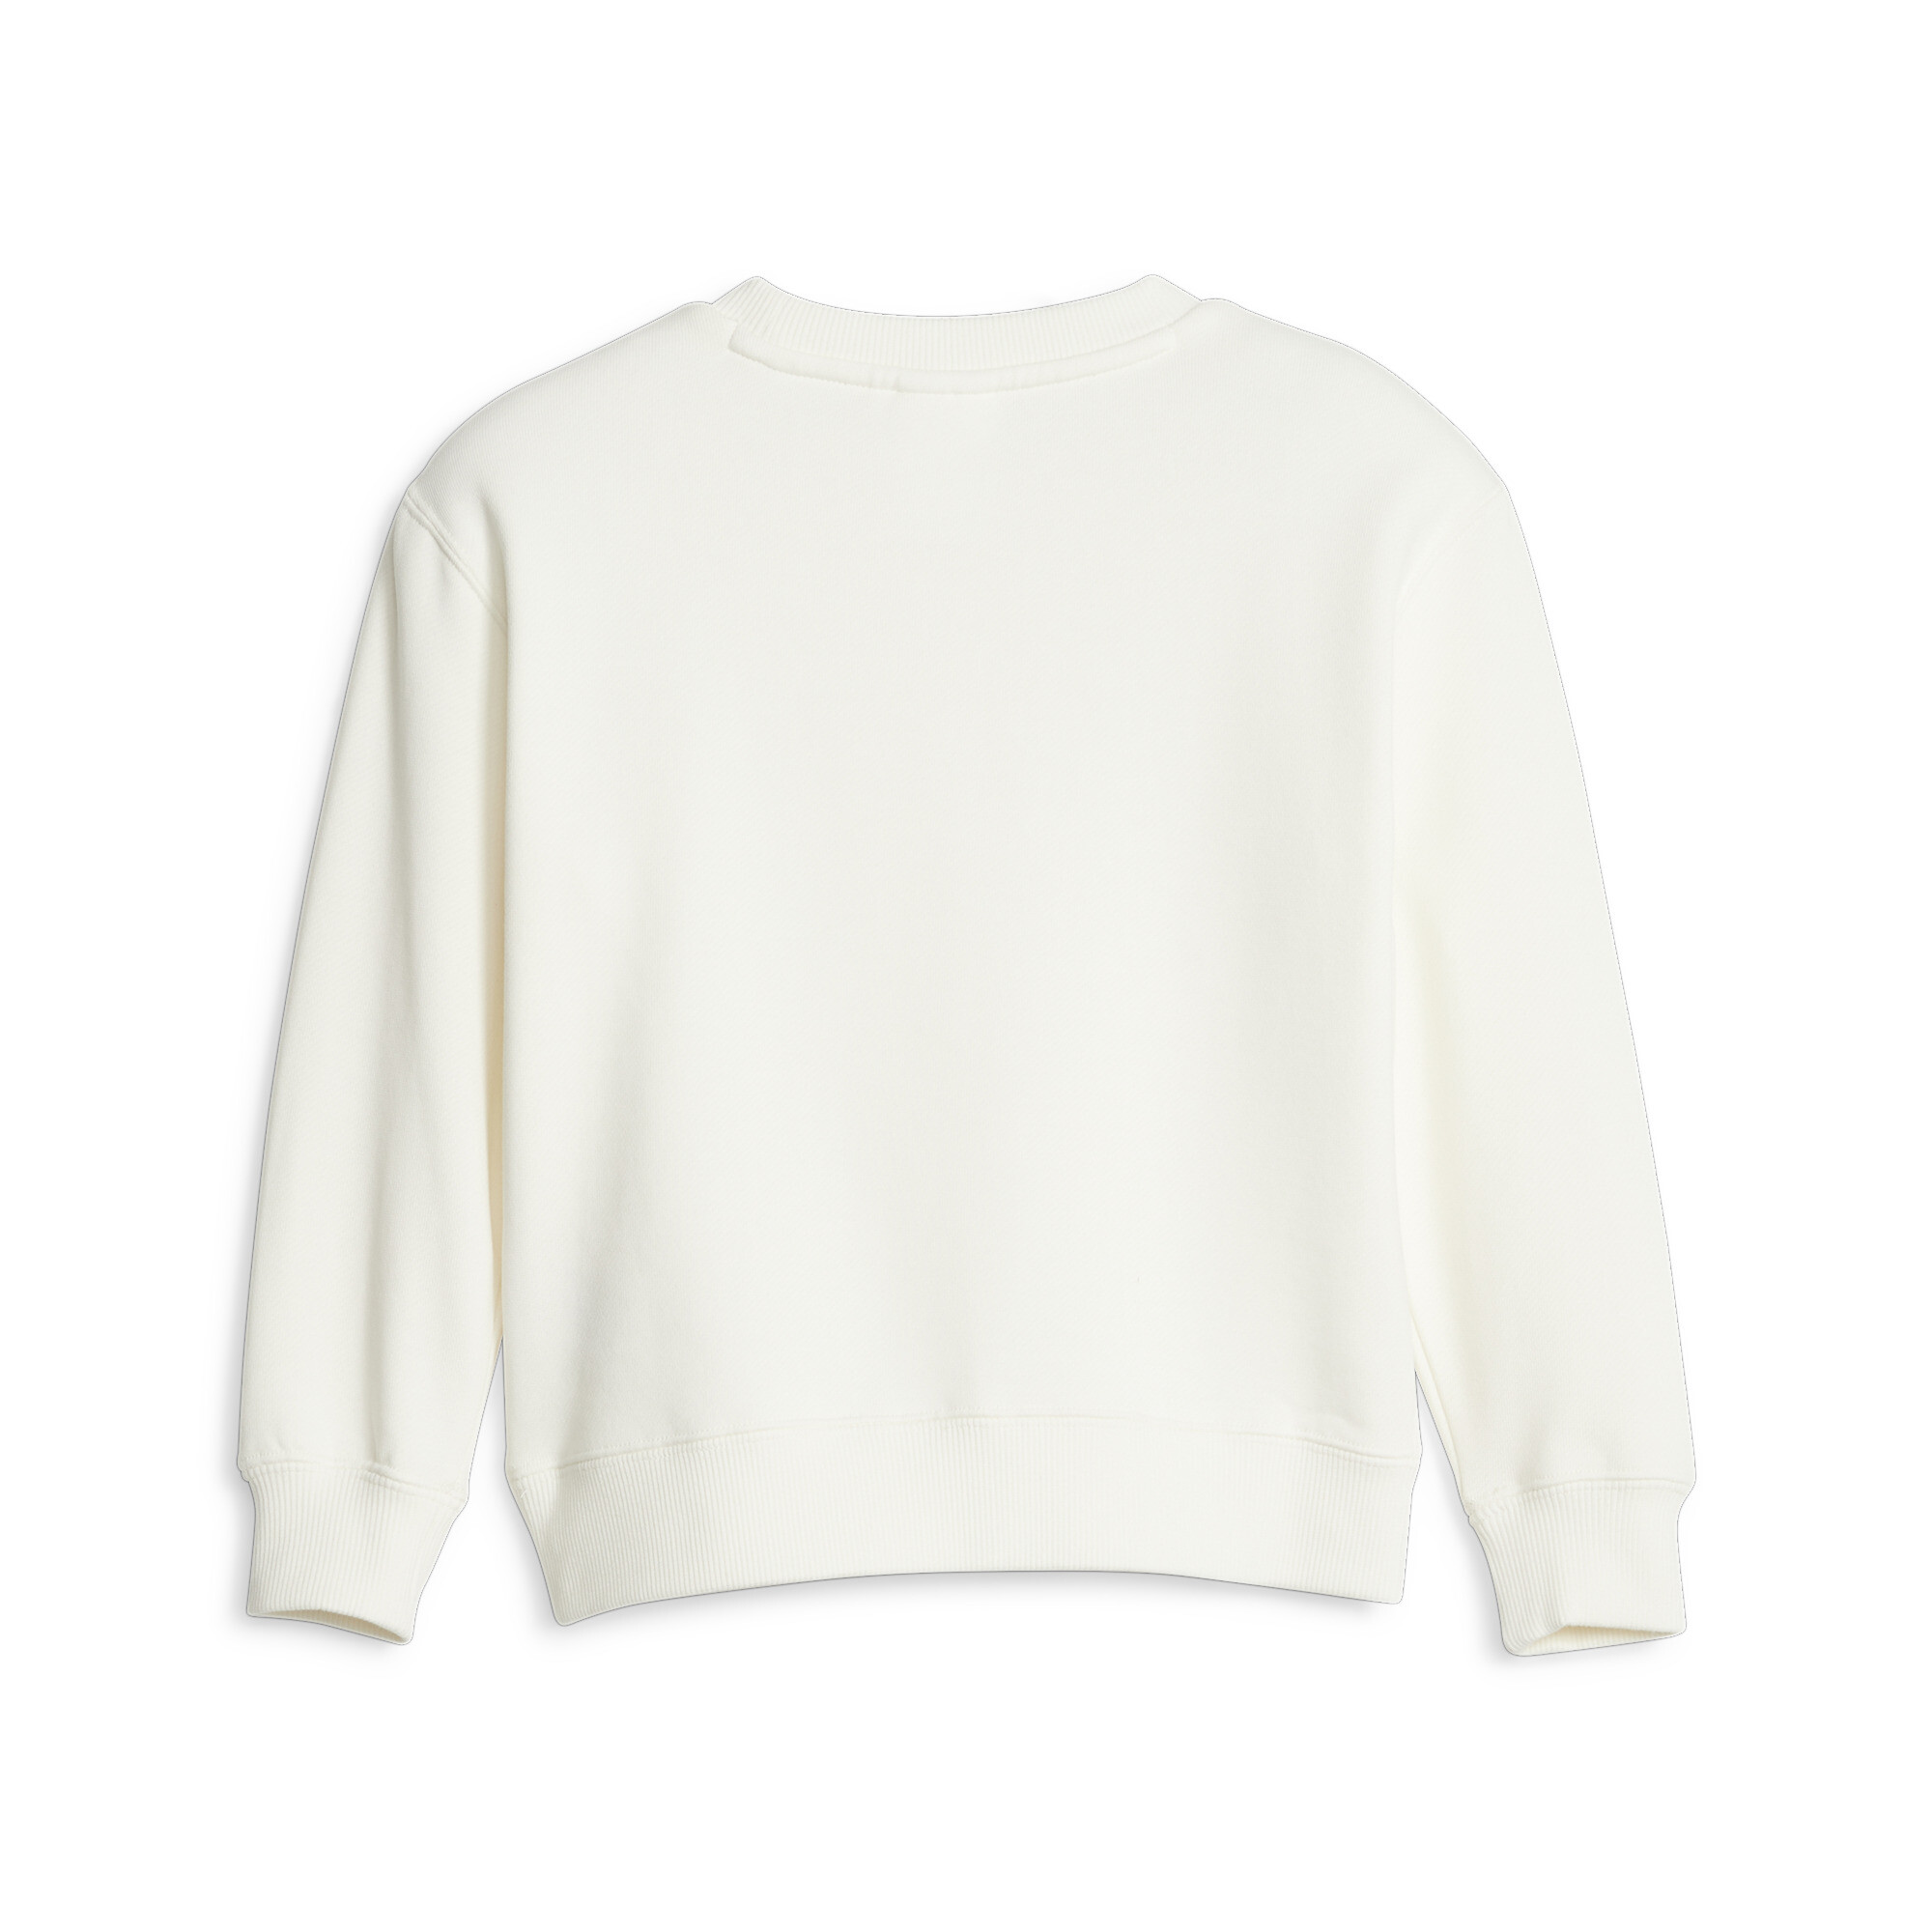 PUMA X LIBERTY Sweatshirt In White, Size 5-6 Youth